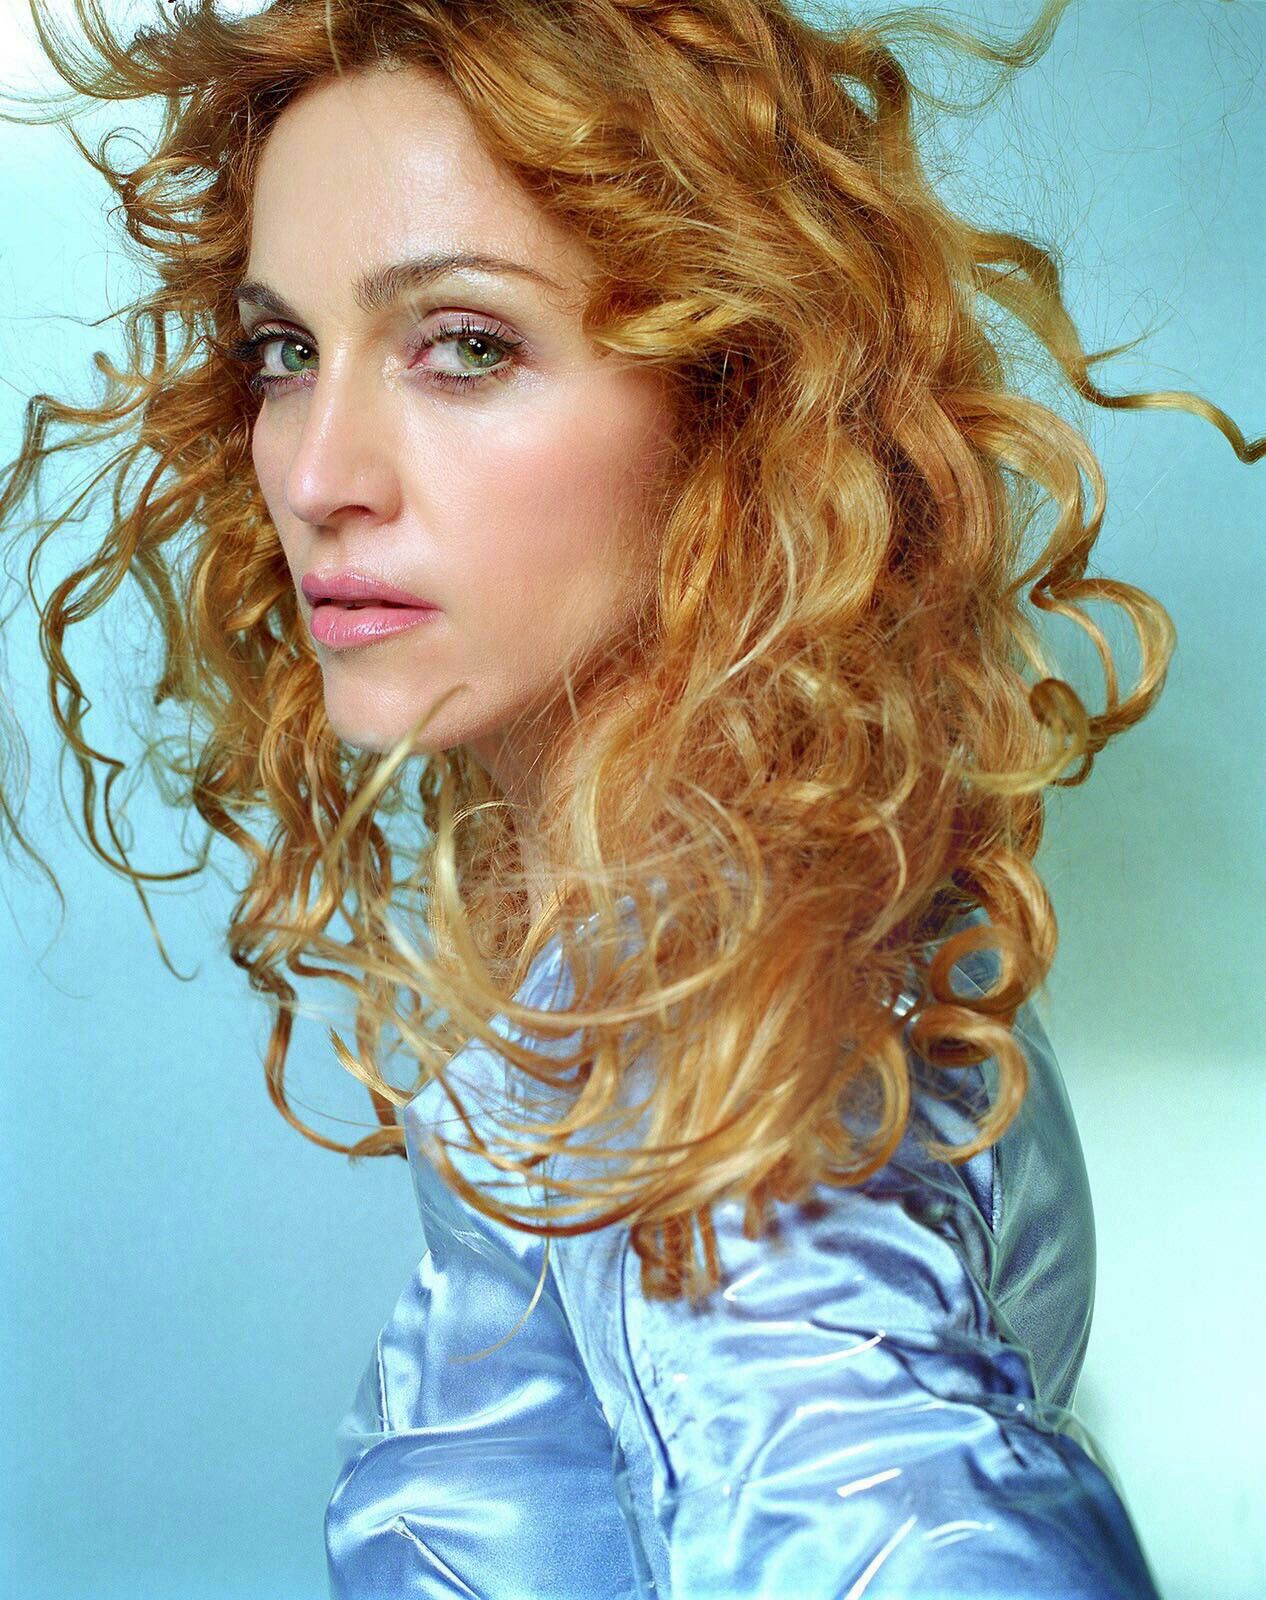 Ray of Light ❤ | Madonna | Pinterest | Madonna, Madonna 90s and ...